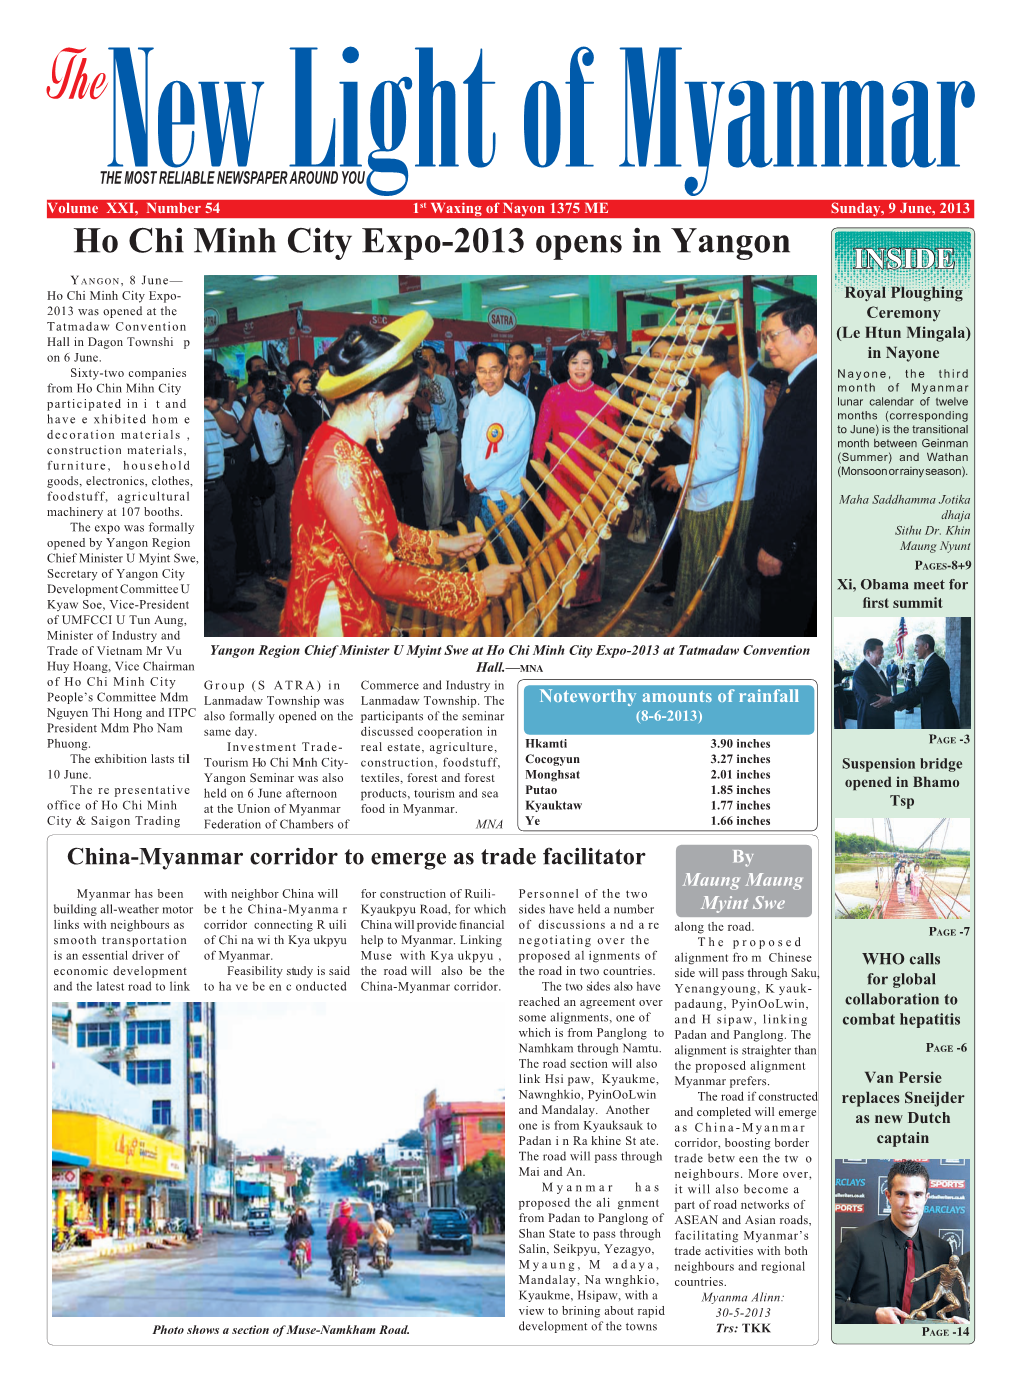 Ho Chi Minh City Expo-2013 Opens in Yangon